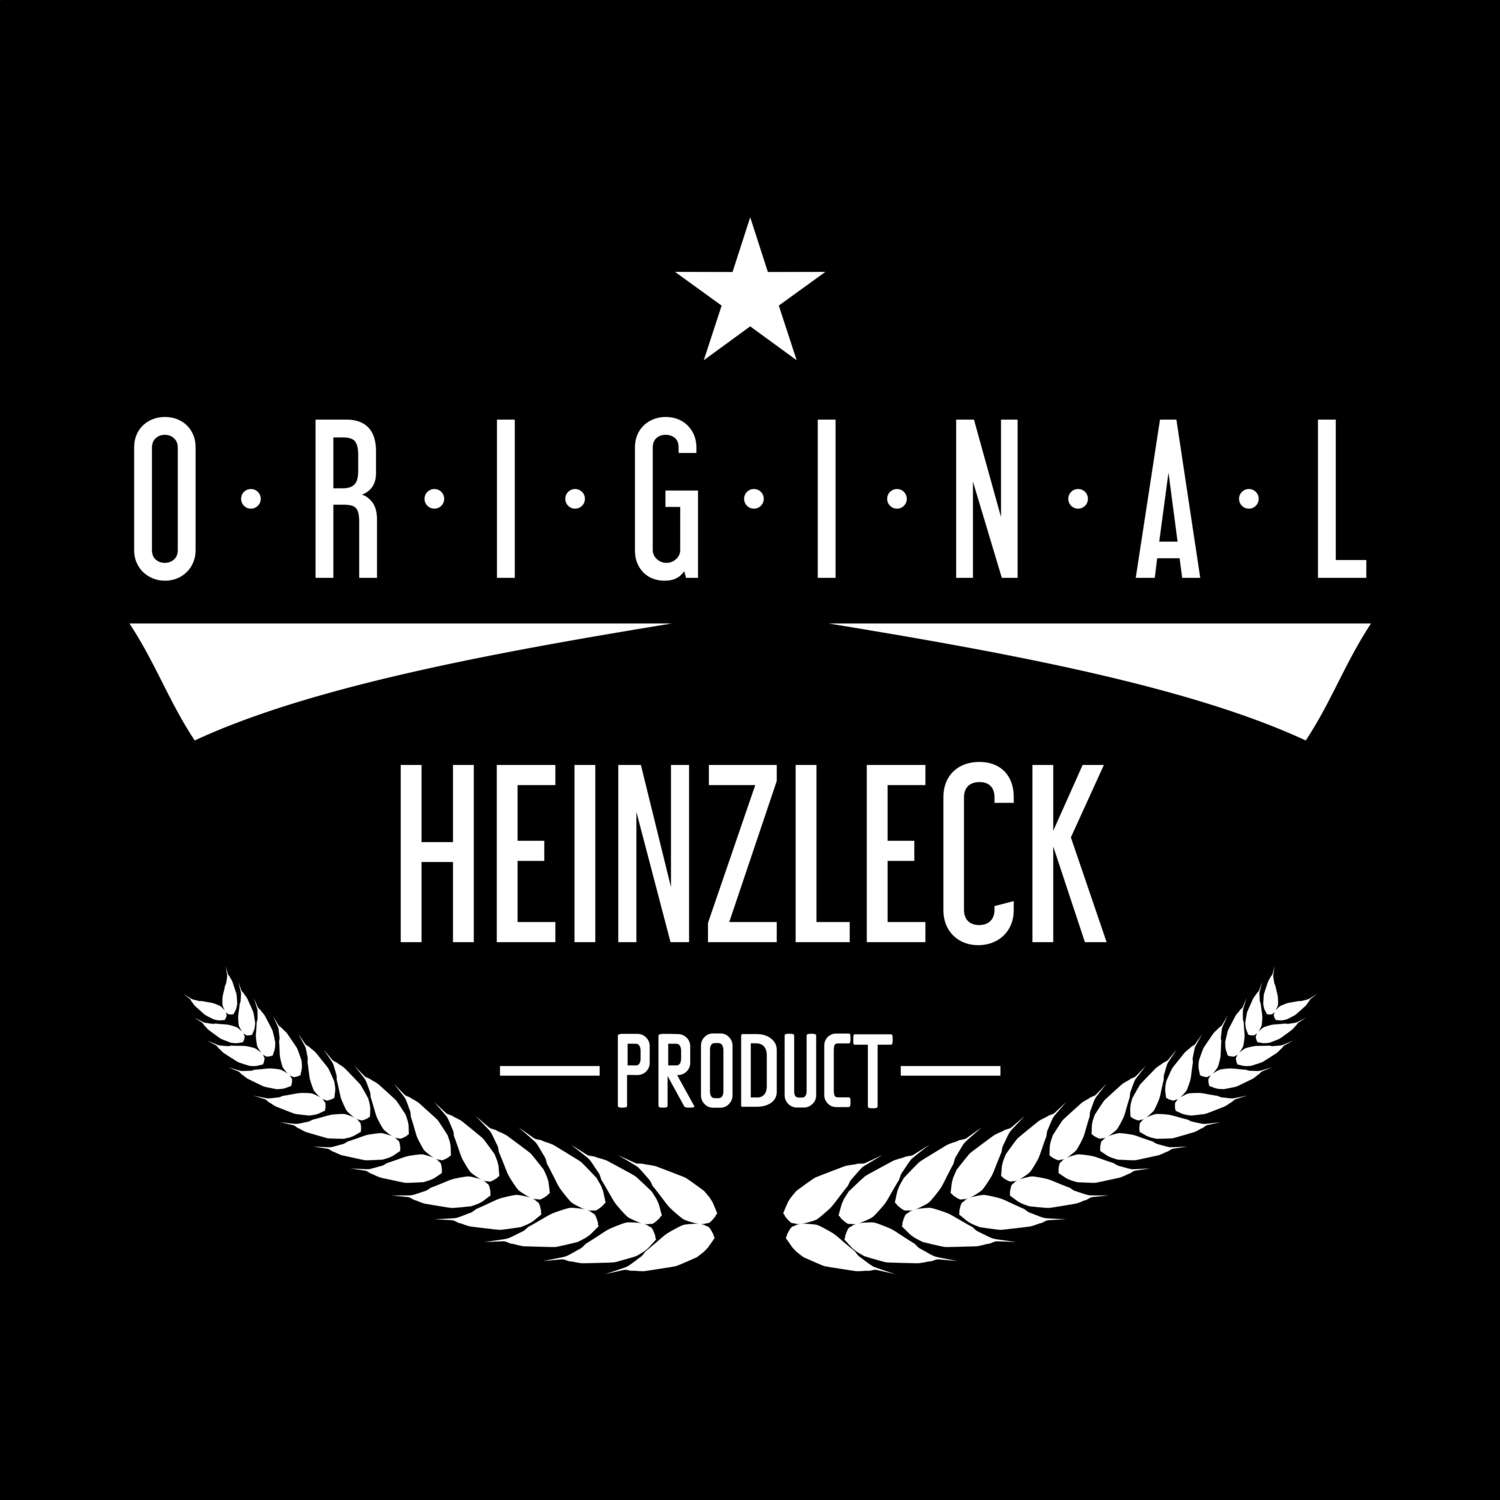 Heinzleck T-Shirt »Original Product«